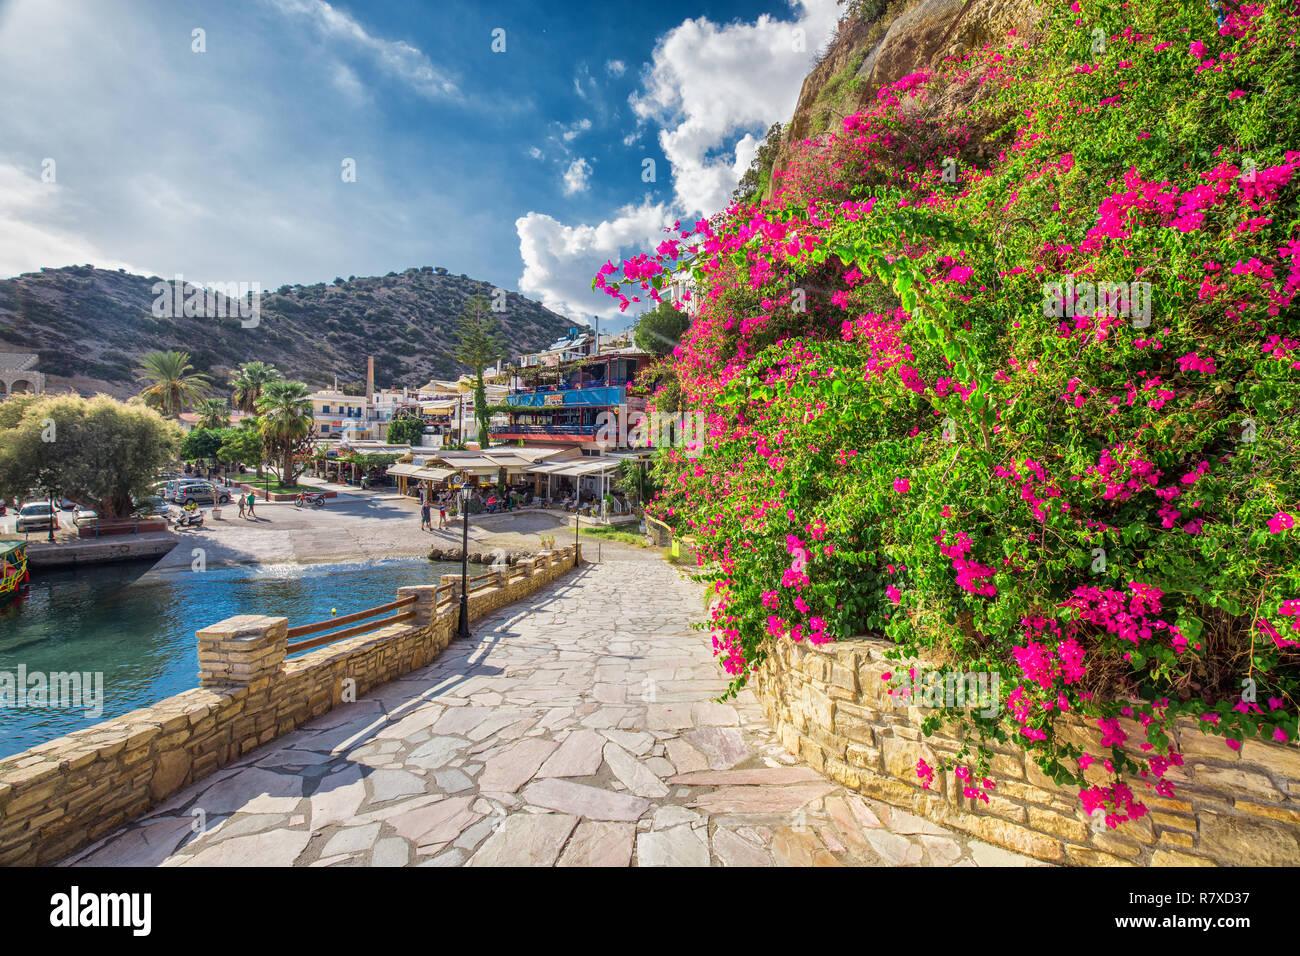 AGIA GALINI, CRETA - October 14, 2018 - Old town of Agial Galini with beautiful flowers, colorful houses and ocean, Creta, Greece, Europe. Stock Photo